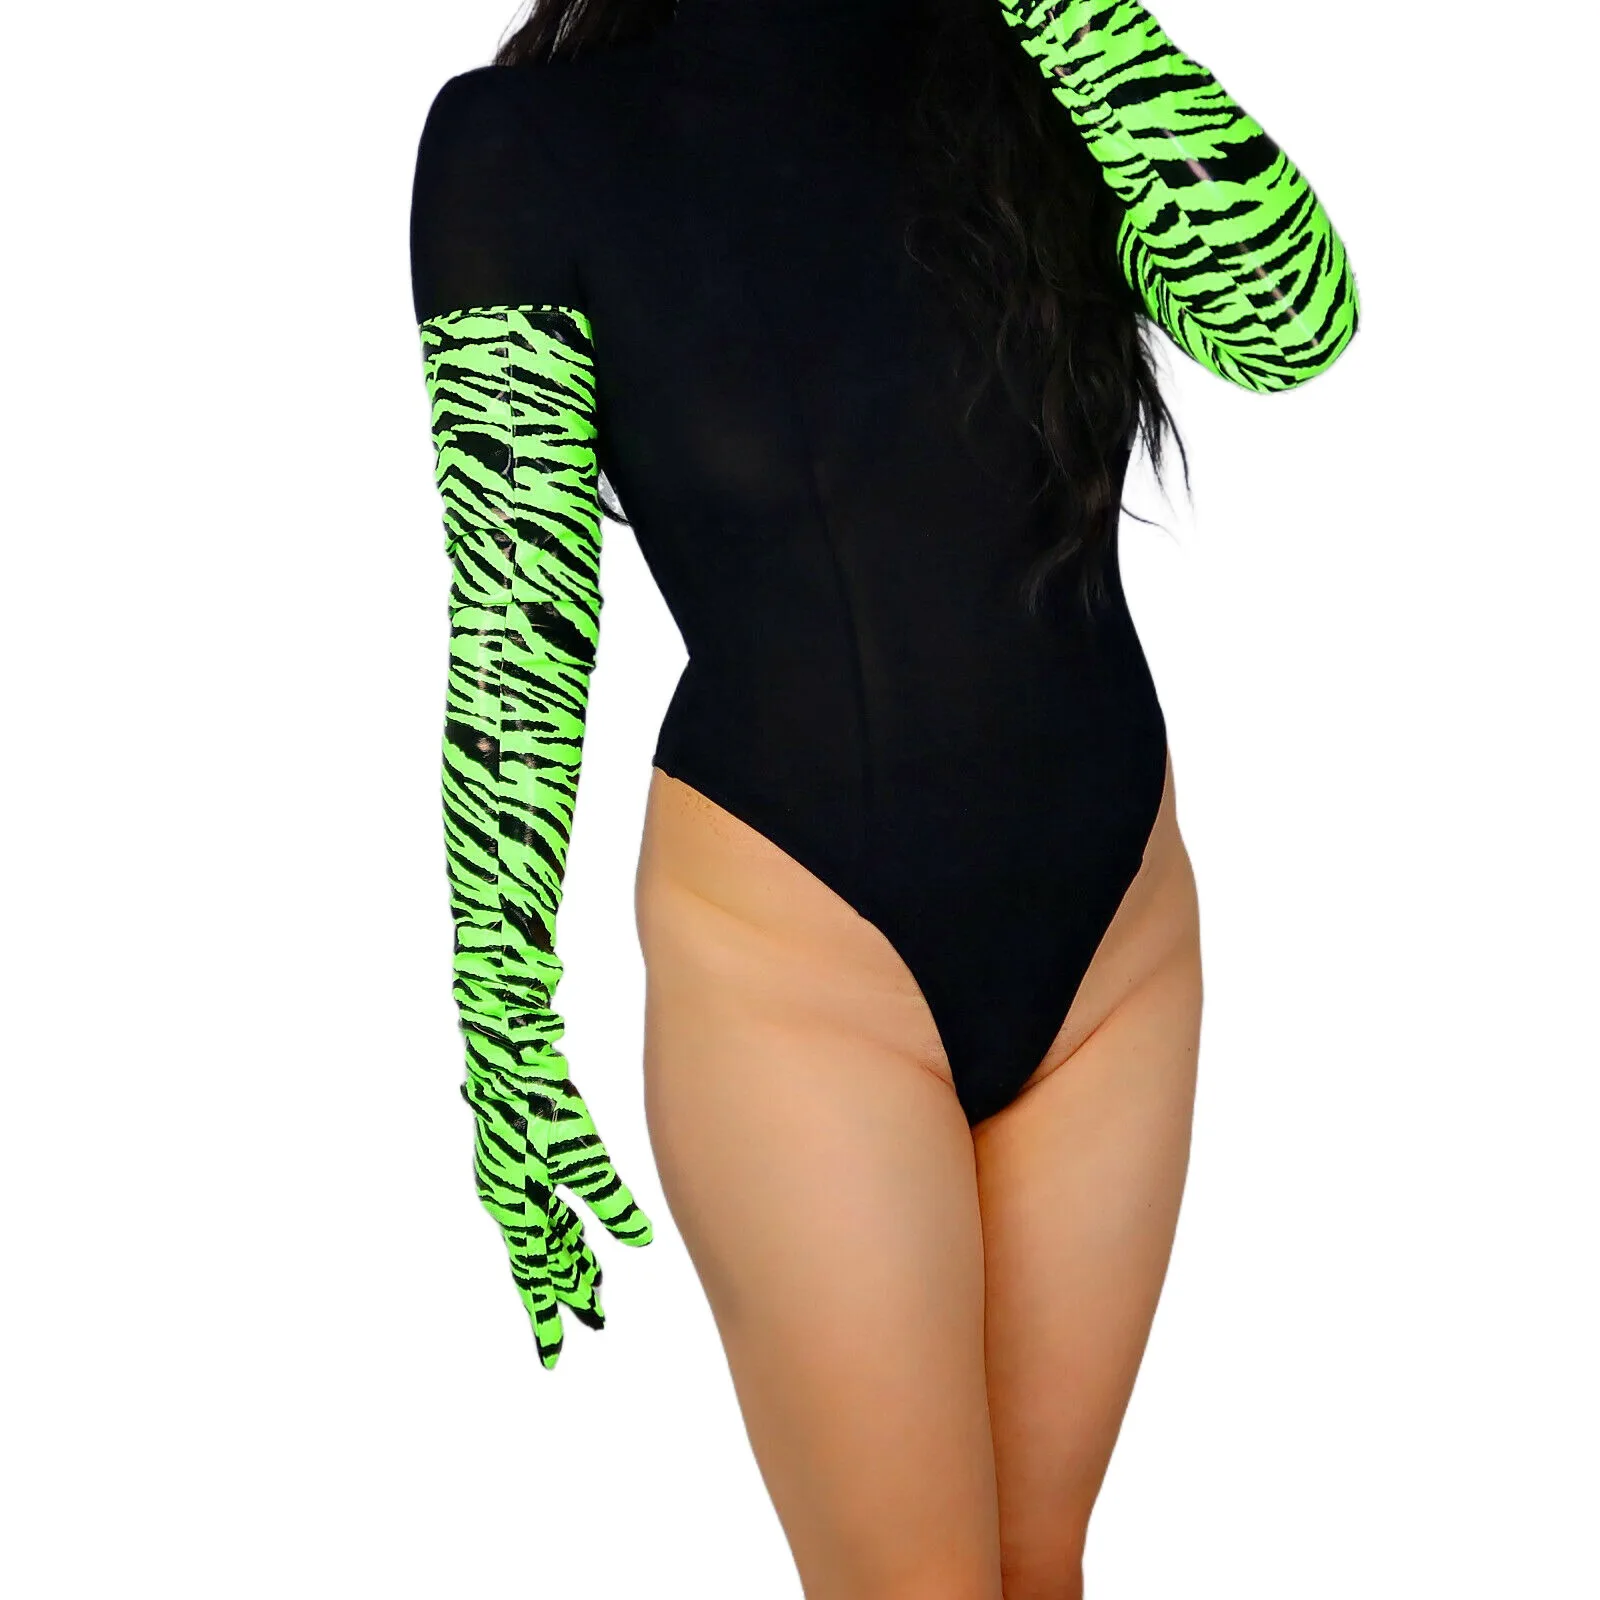 

DooWay Fluorescent Green Zebra Evening Gloves Shine LATEX Patent Leather Wild Animal Print Cosplay Christmas Fashion Show Glove